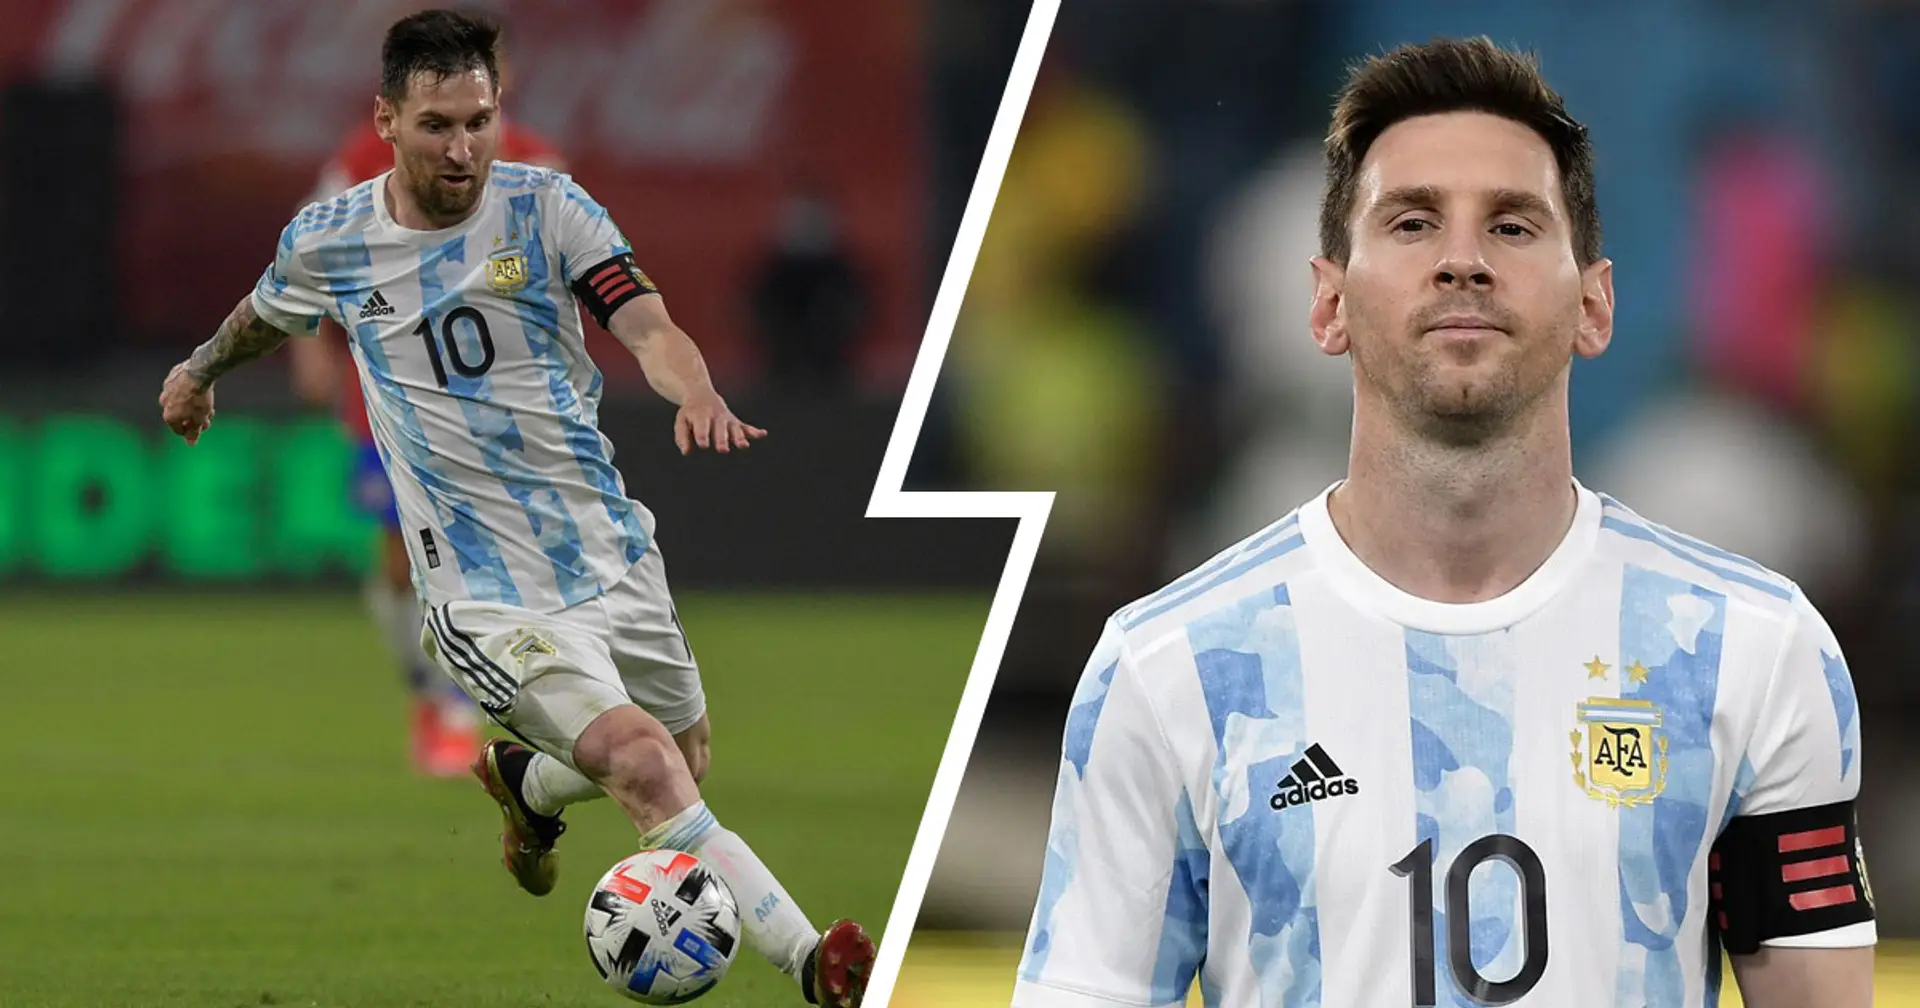 Most goals, assists and more: Leo Messi's 2021 Copa America stats so far